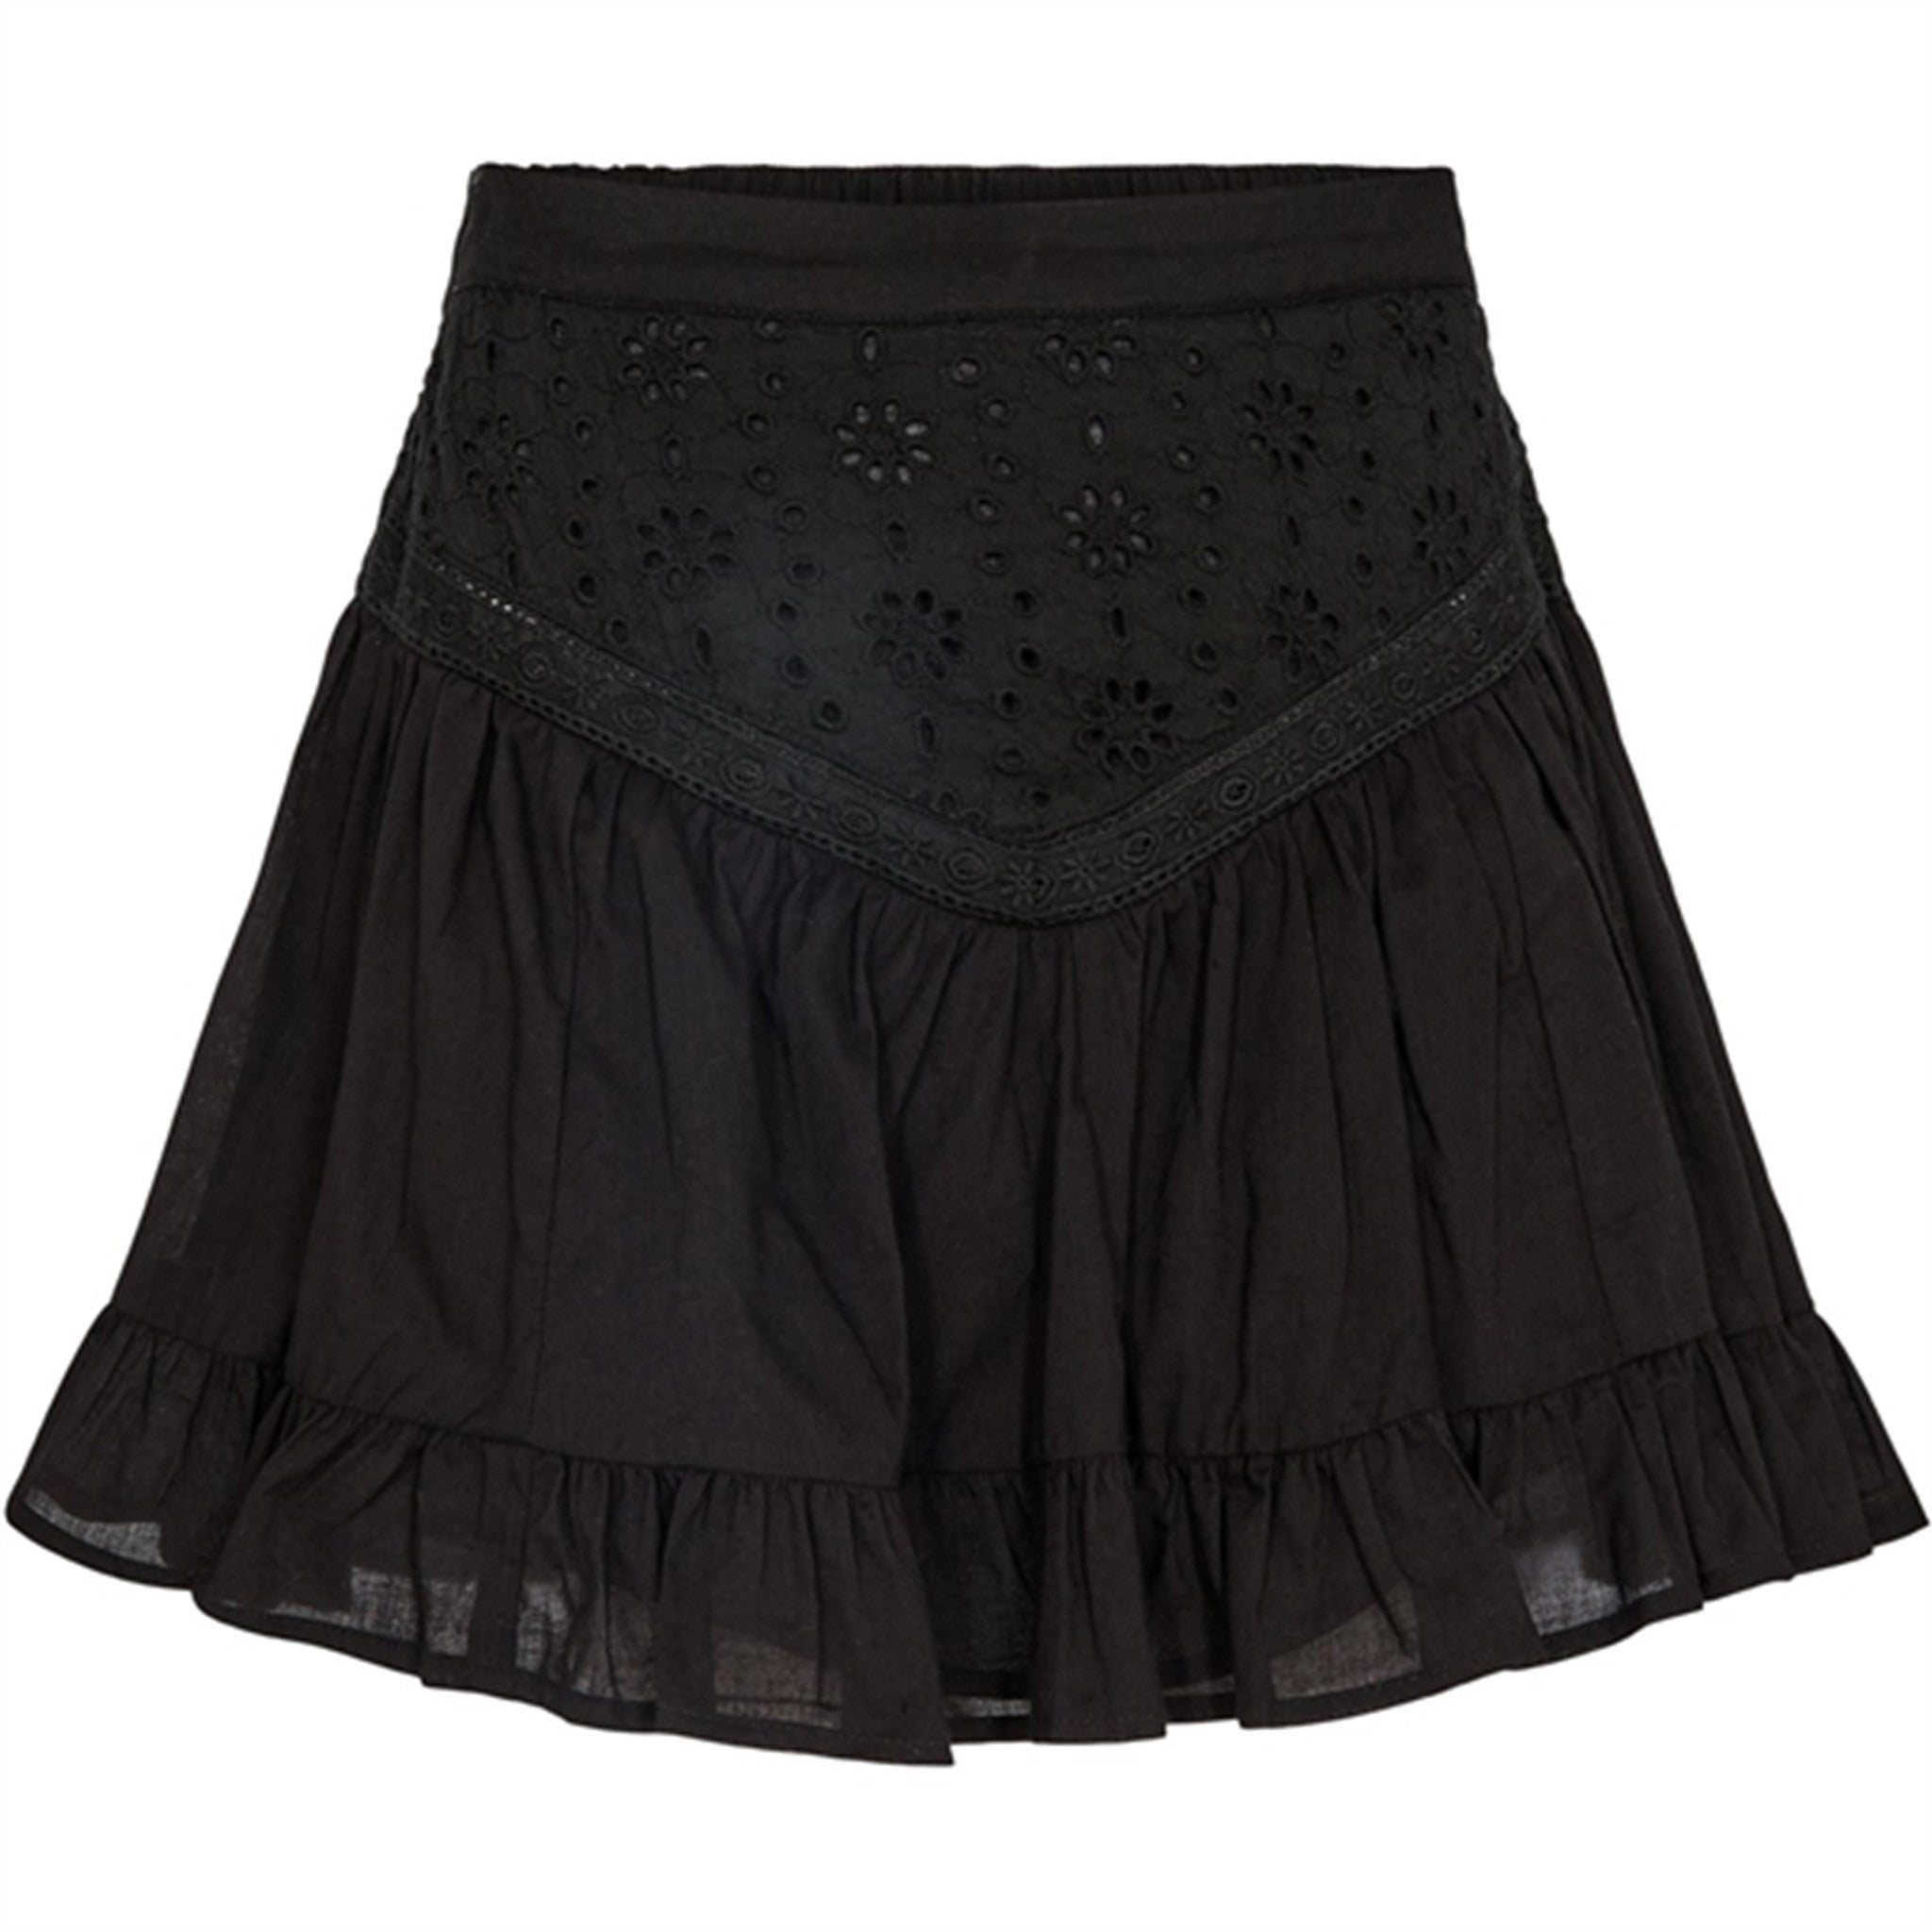 Sofie Schnoor Black Skirt